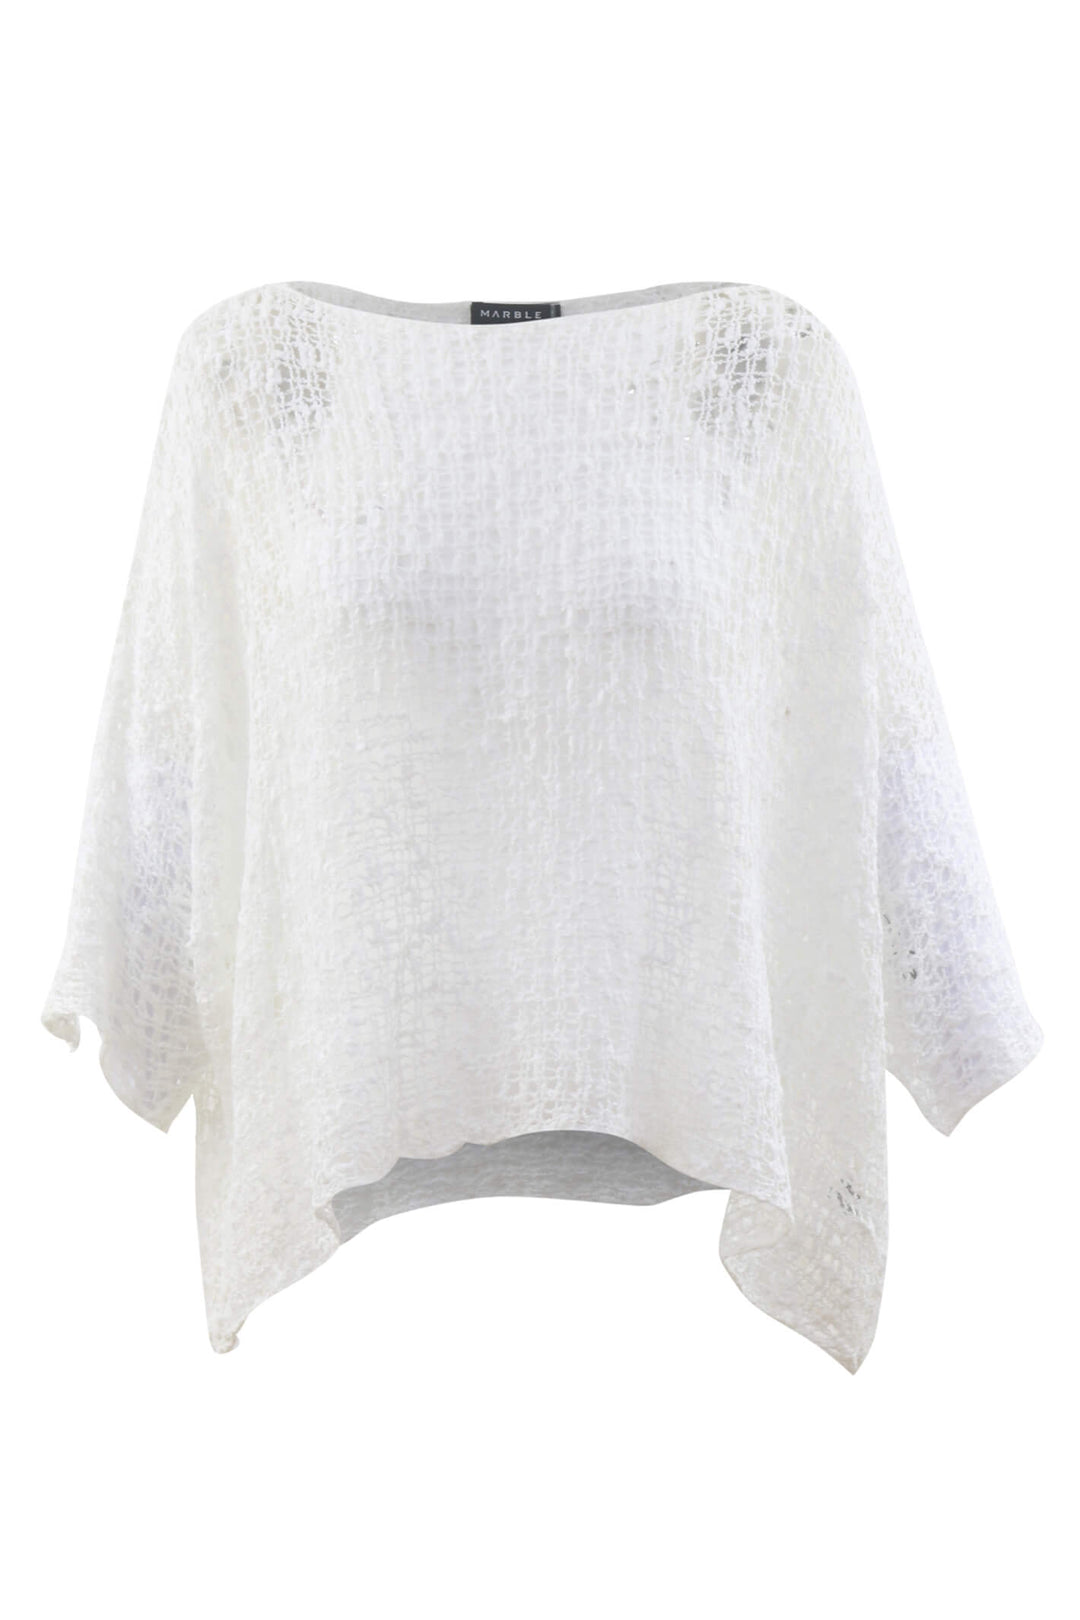 Marble 5186 102 White Crochet Mesh Top - Shirley Allum Boutique